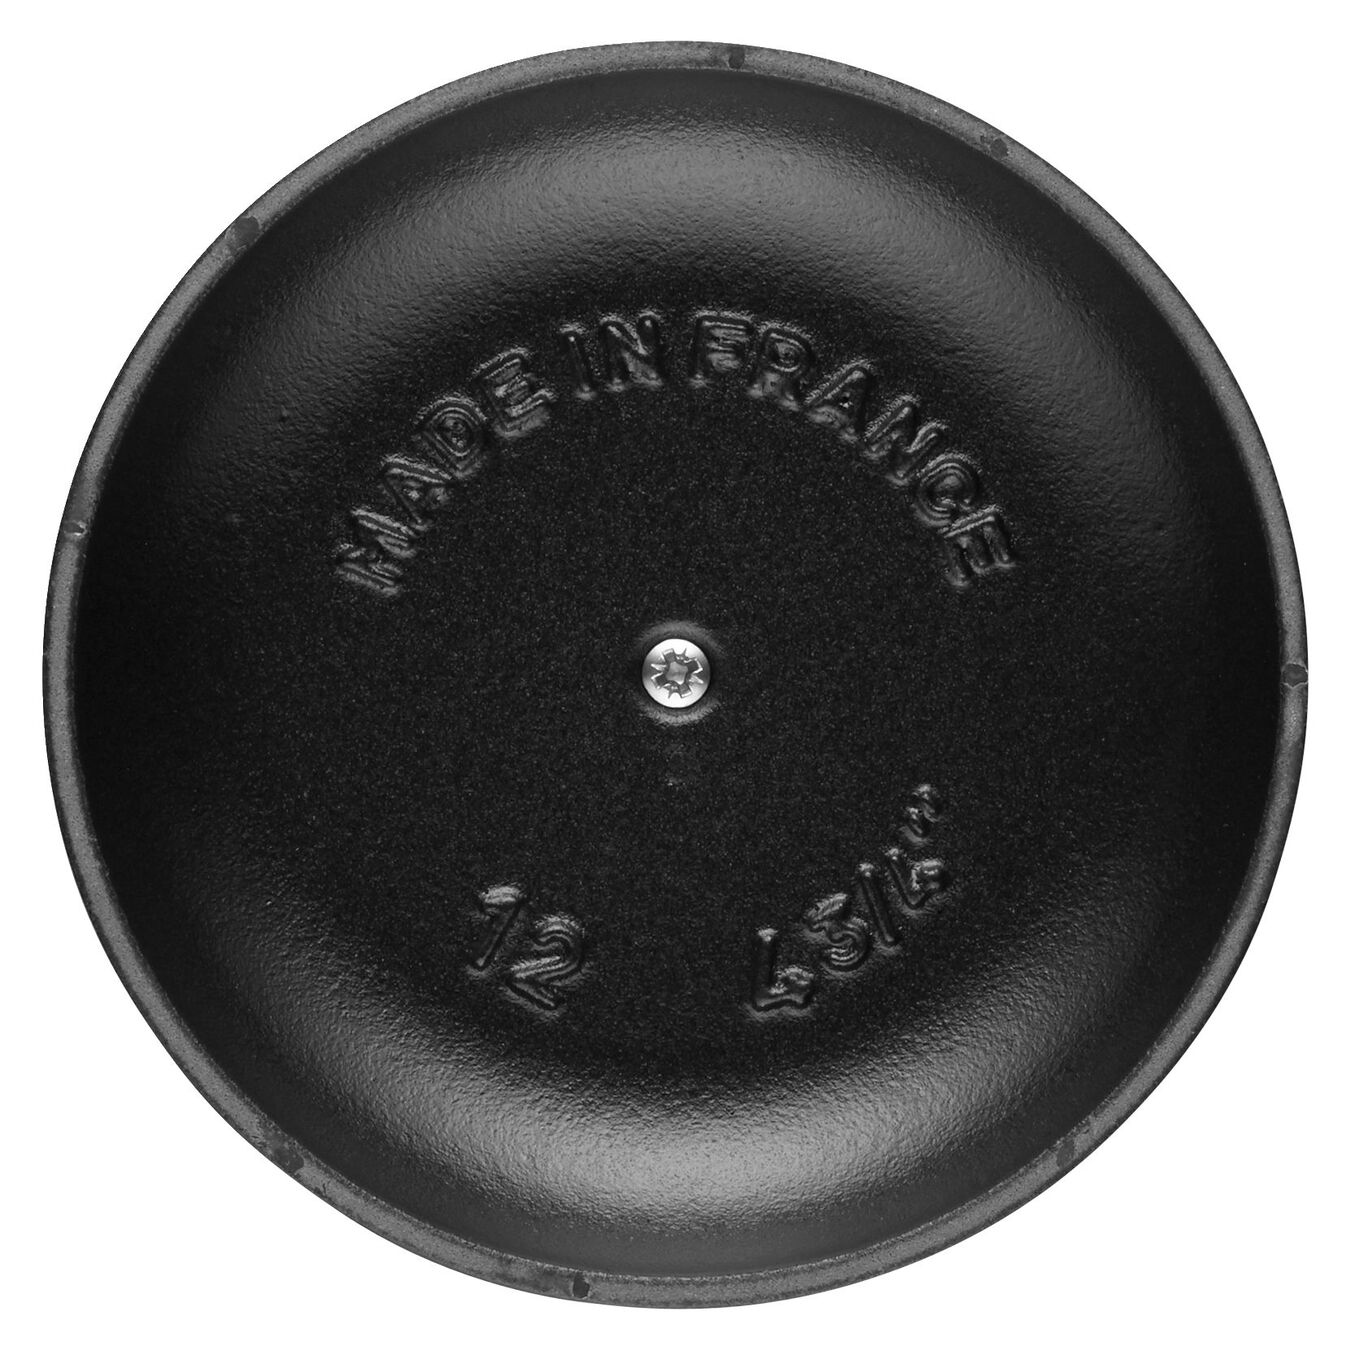 500 ml cast iron round La Coquette, black,,large 5